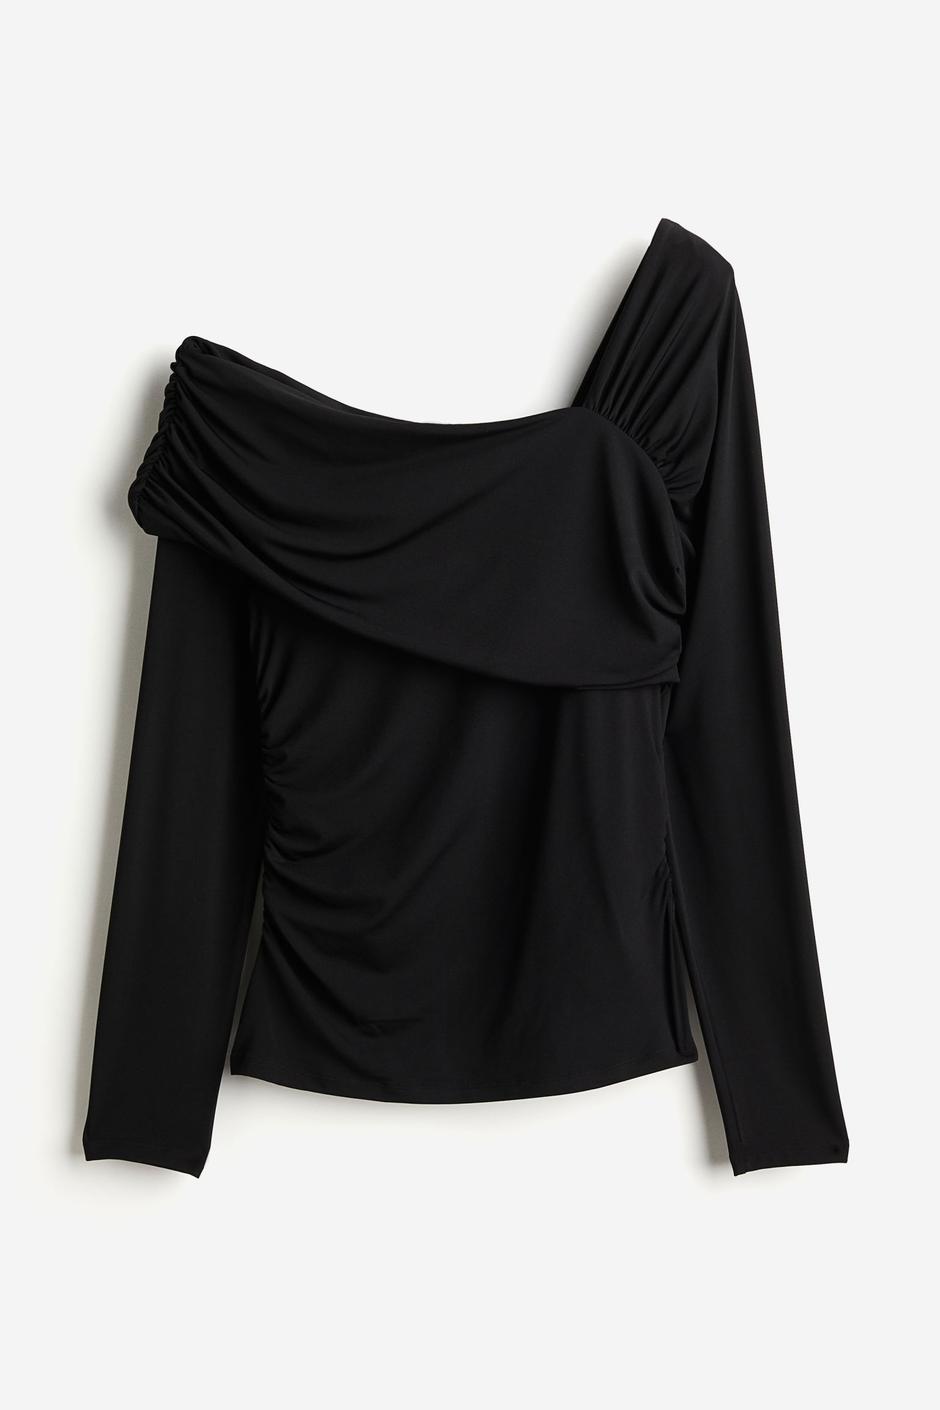 Foto: H&M, asimetrični crni top, 20,99 eura | Autor: H&M